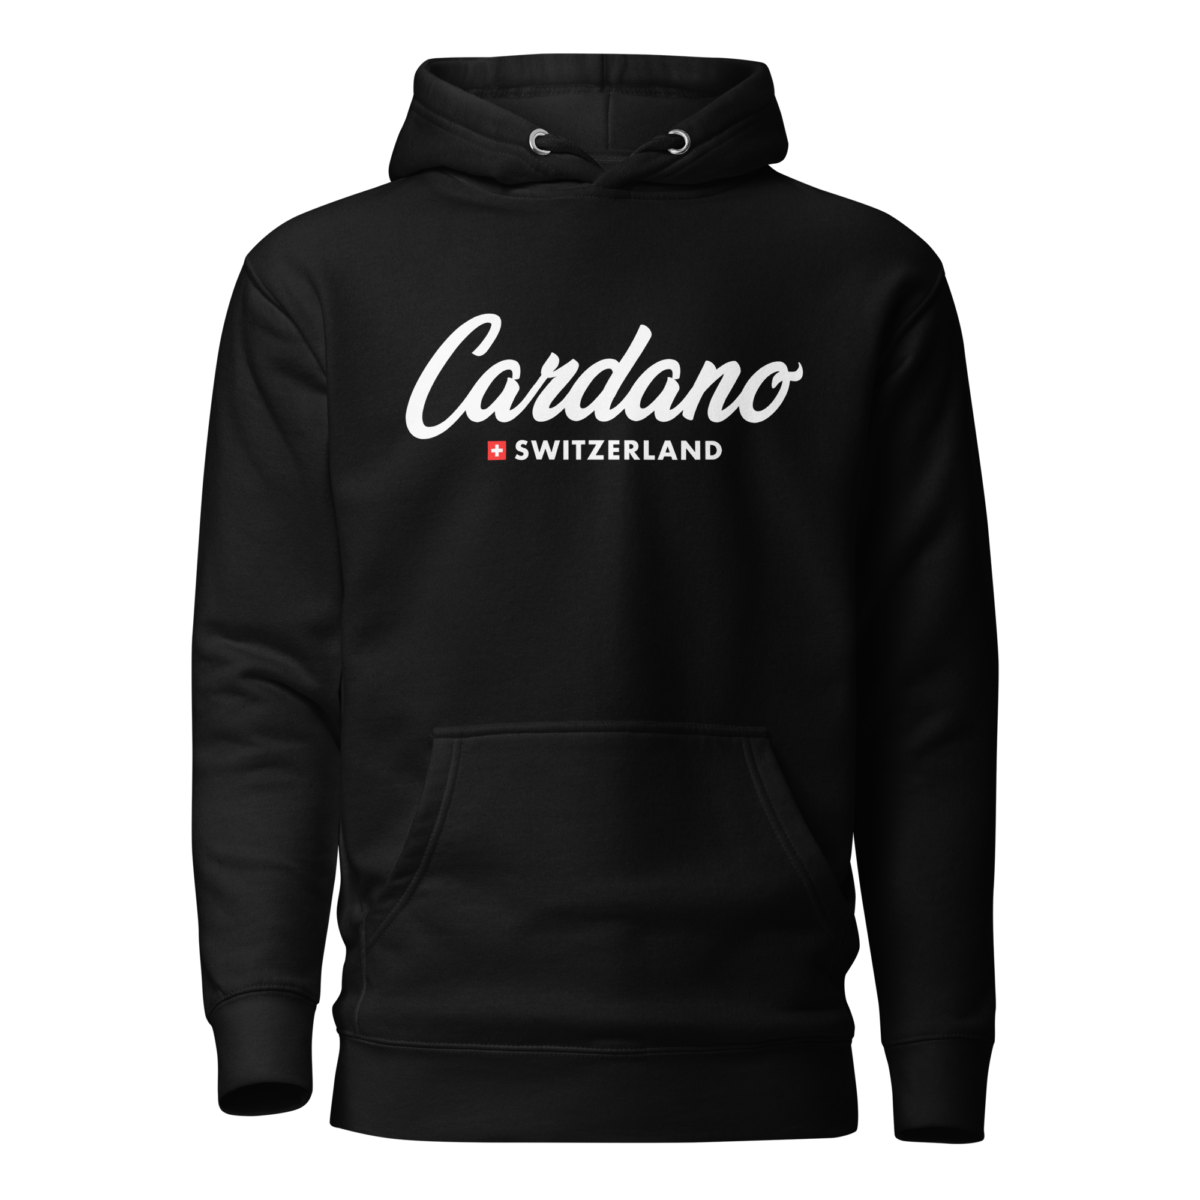 unisex premium hoodie black front 63a21a2a08222 - Cardano Switzerland Hoodie